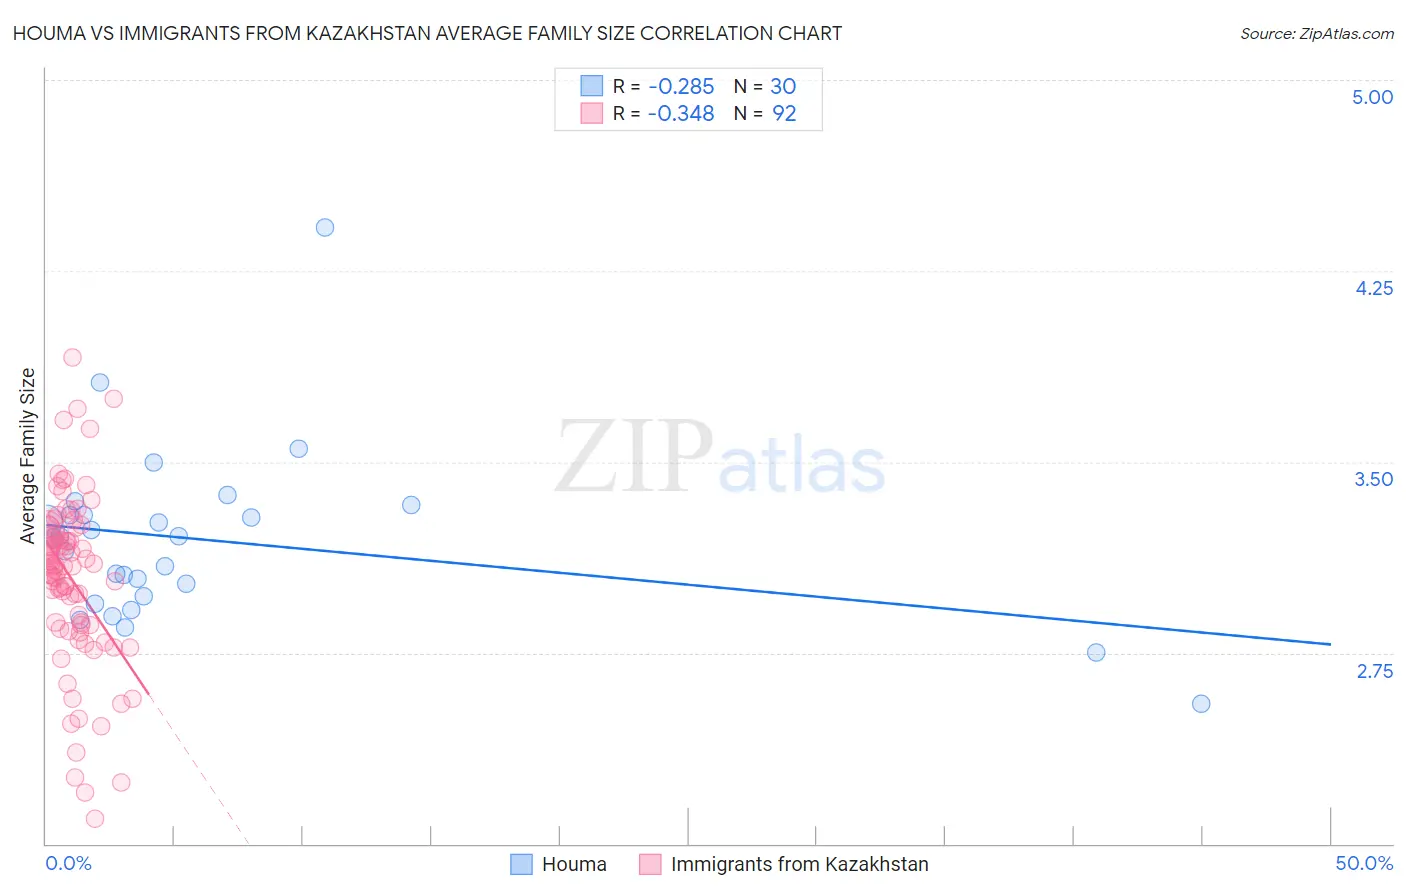 Houma vs Immigrants from Kazakhstan Average Family Size